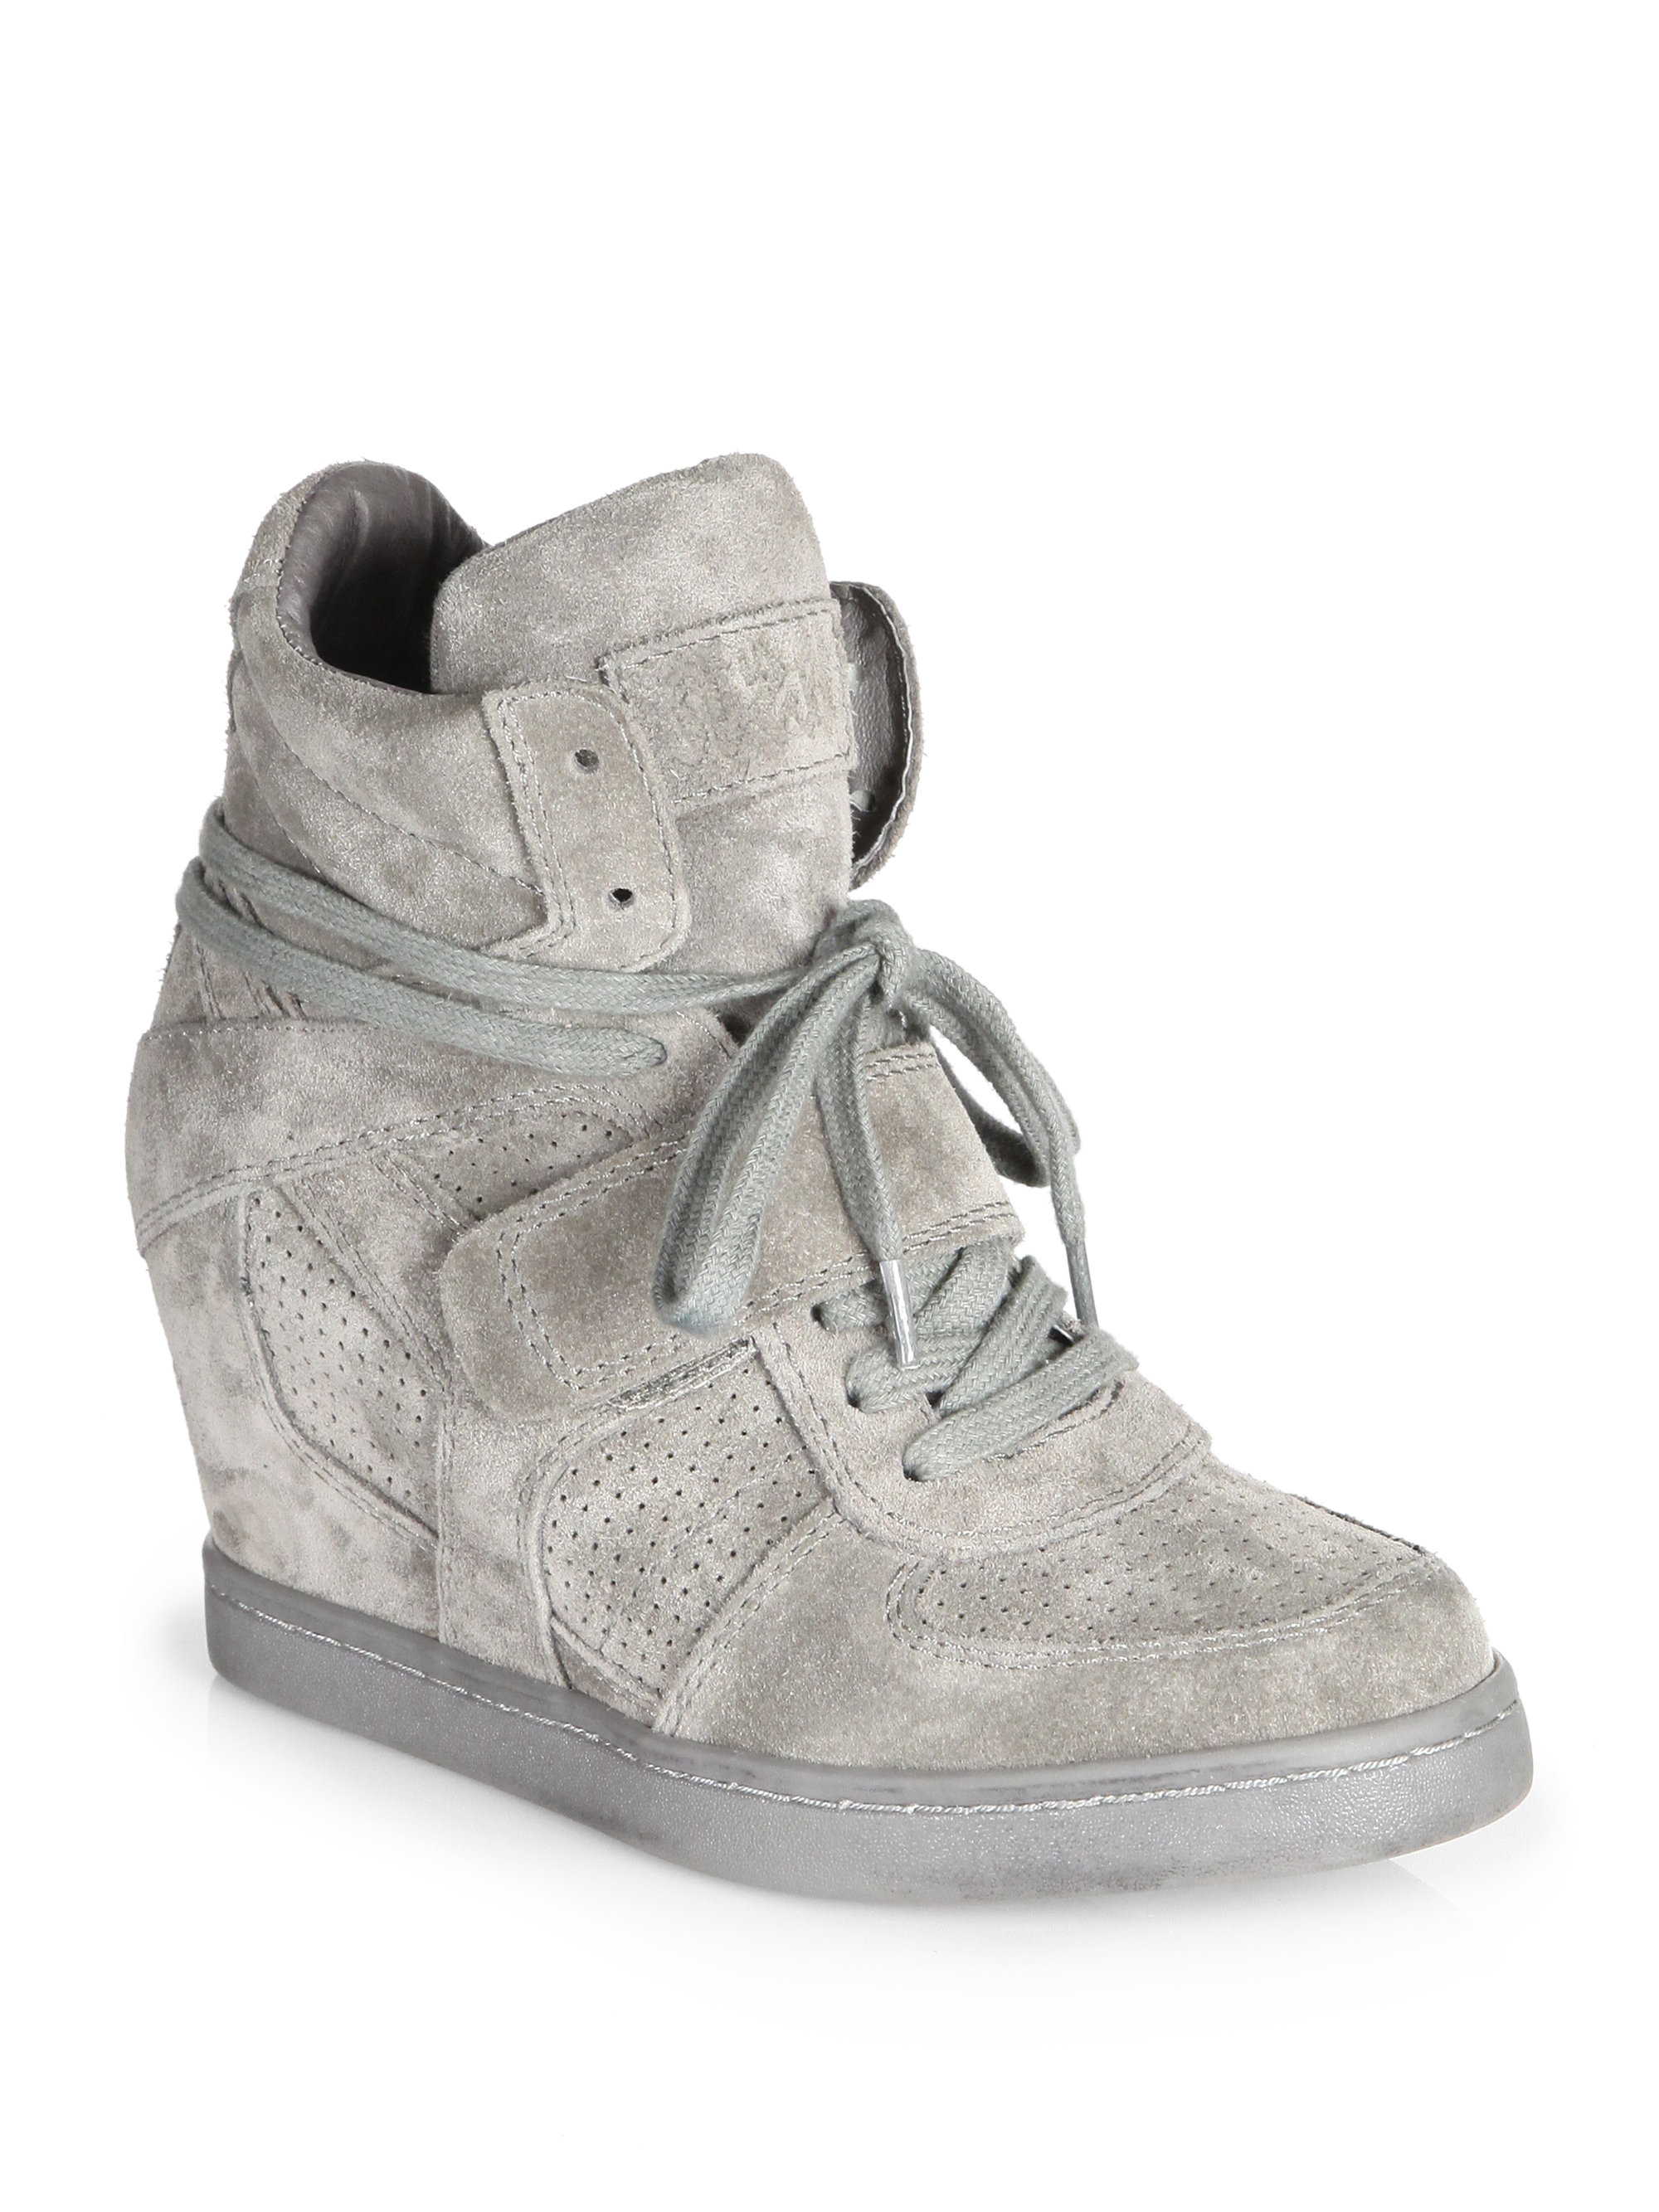 Ash Cool Suede Wedge Sneakers in Slate (Gray) - Lyst